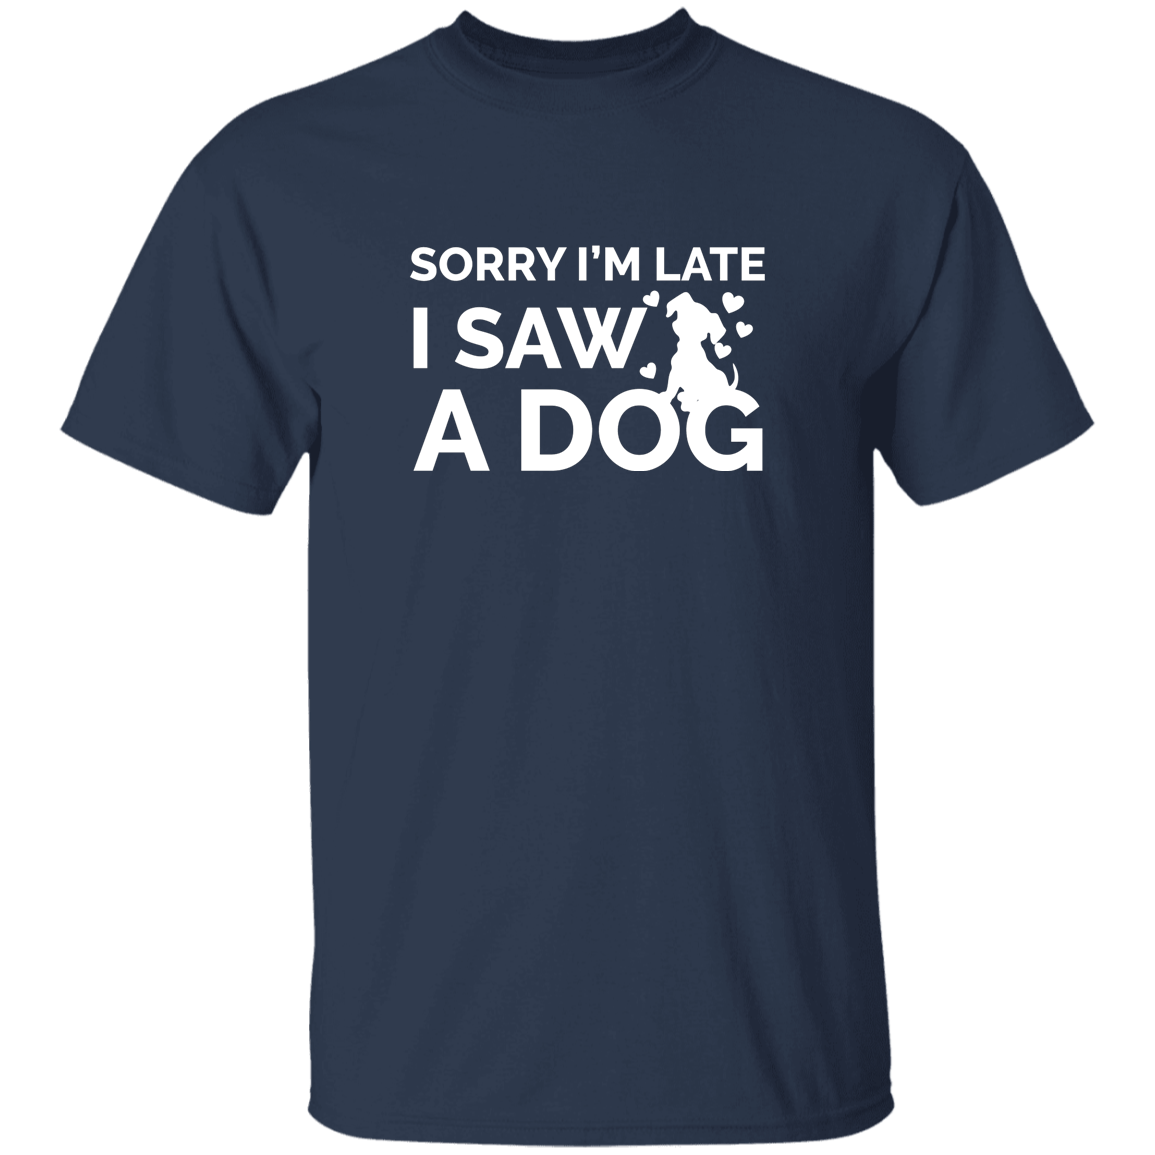 Sorry I'm Late Dog - T Shirt.